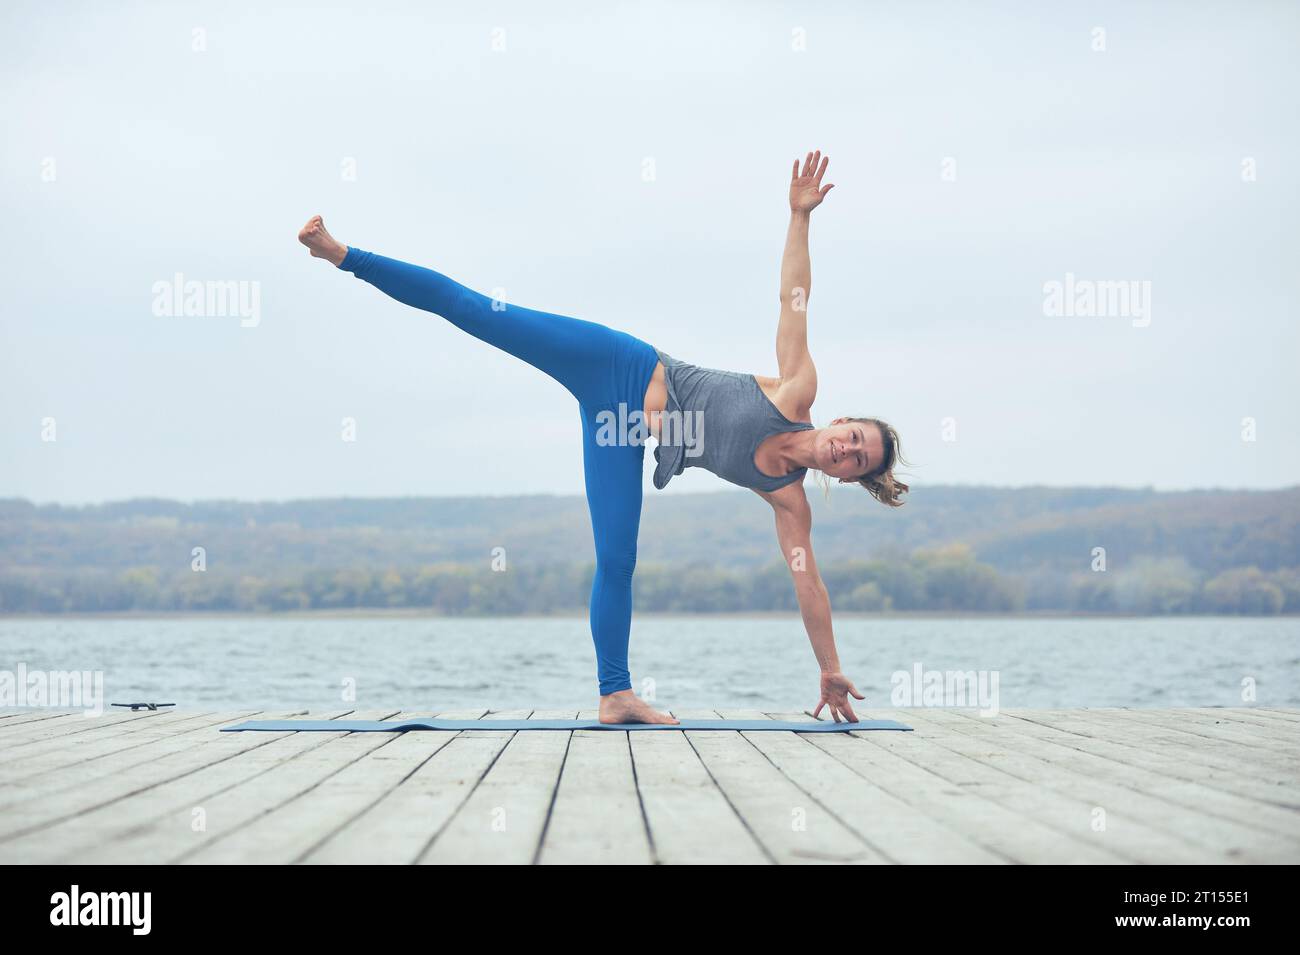 Beautiful young woman practices yoga asana Ardha Chandrasana - Half Moon pose on the wooden deck near the lake. Stock Photo